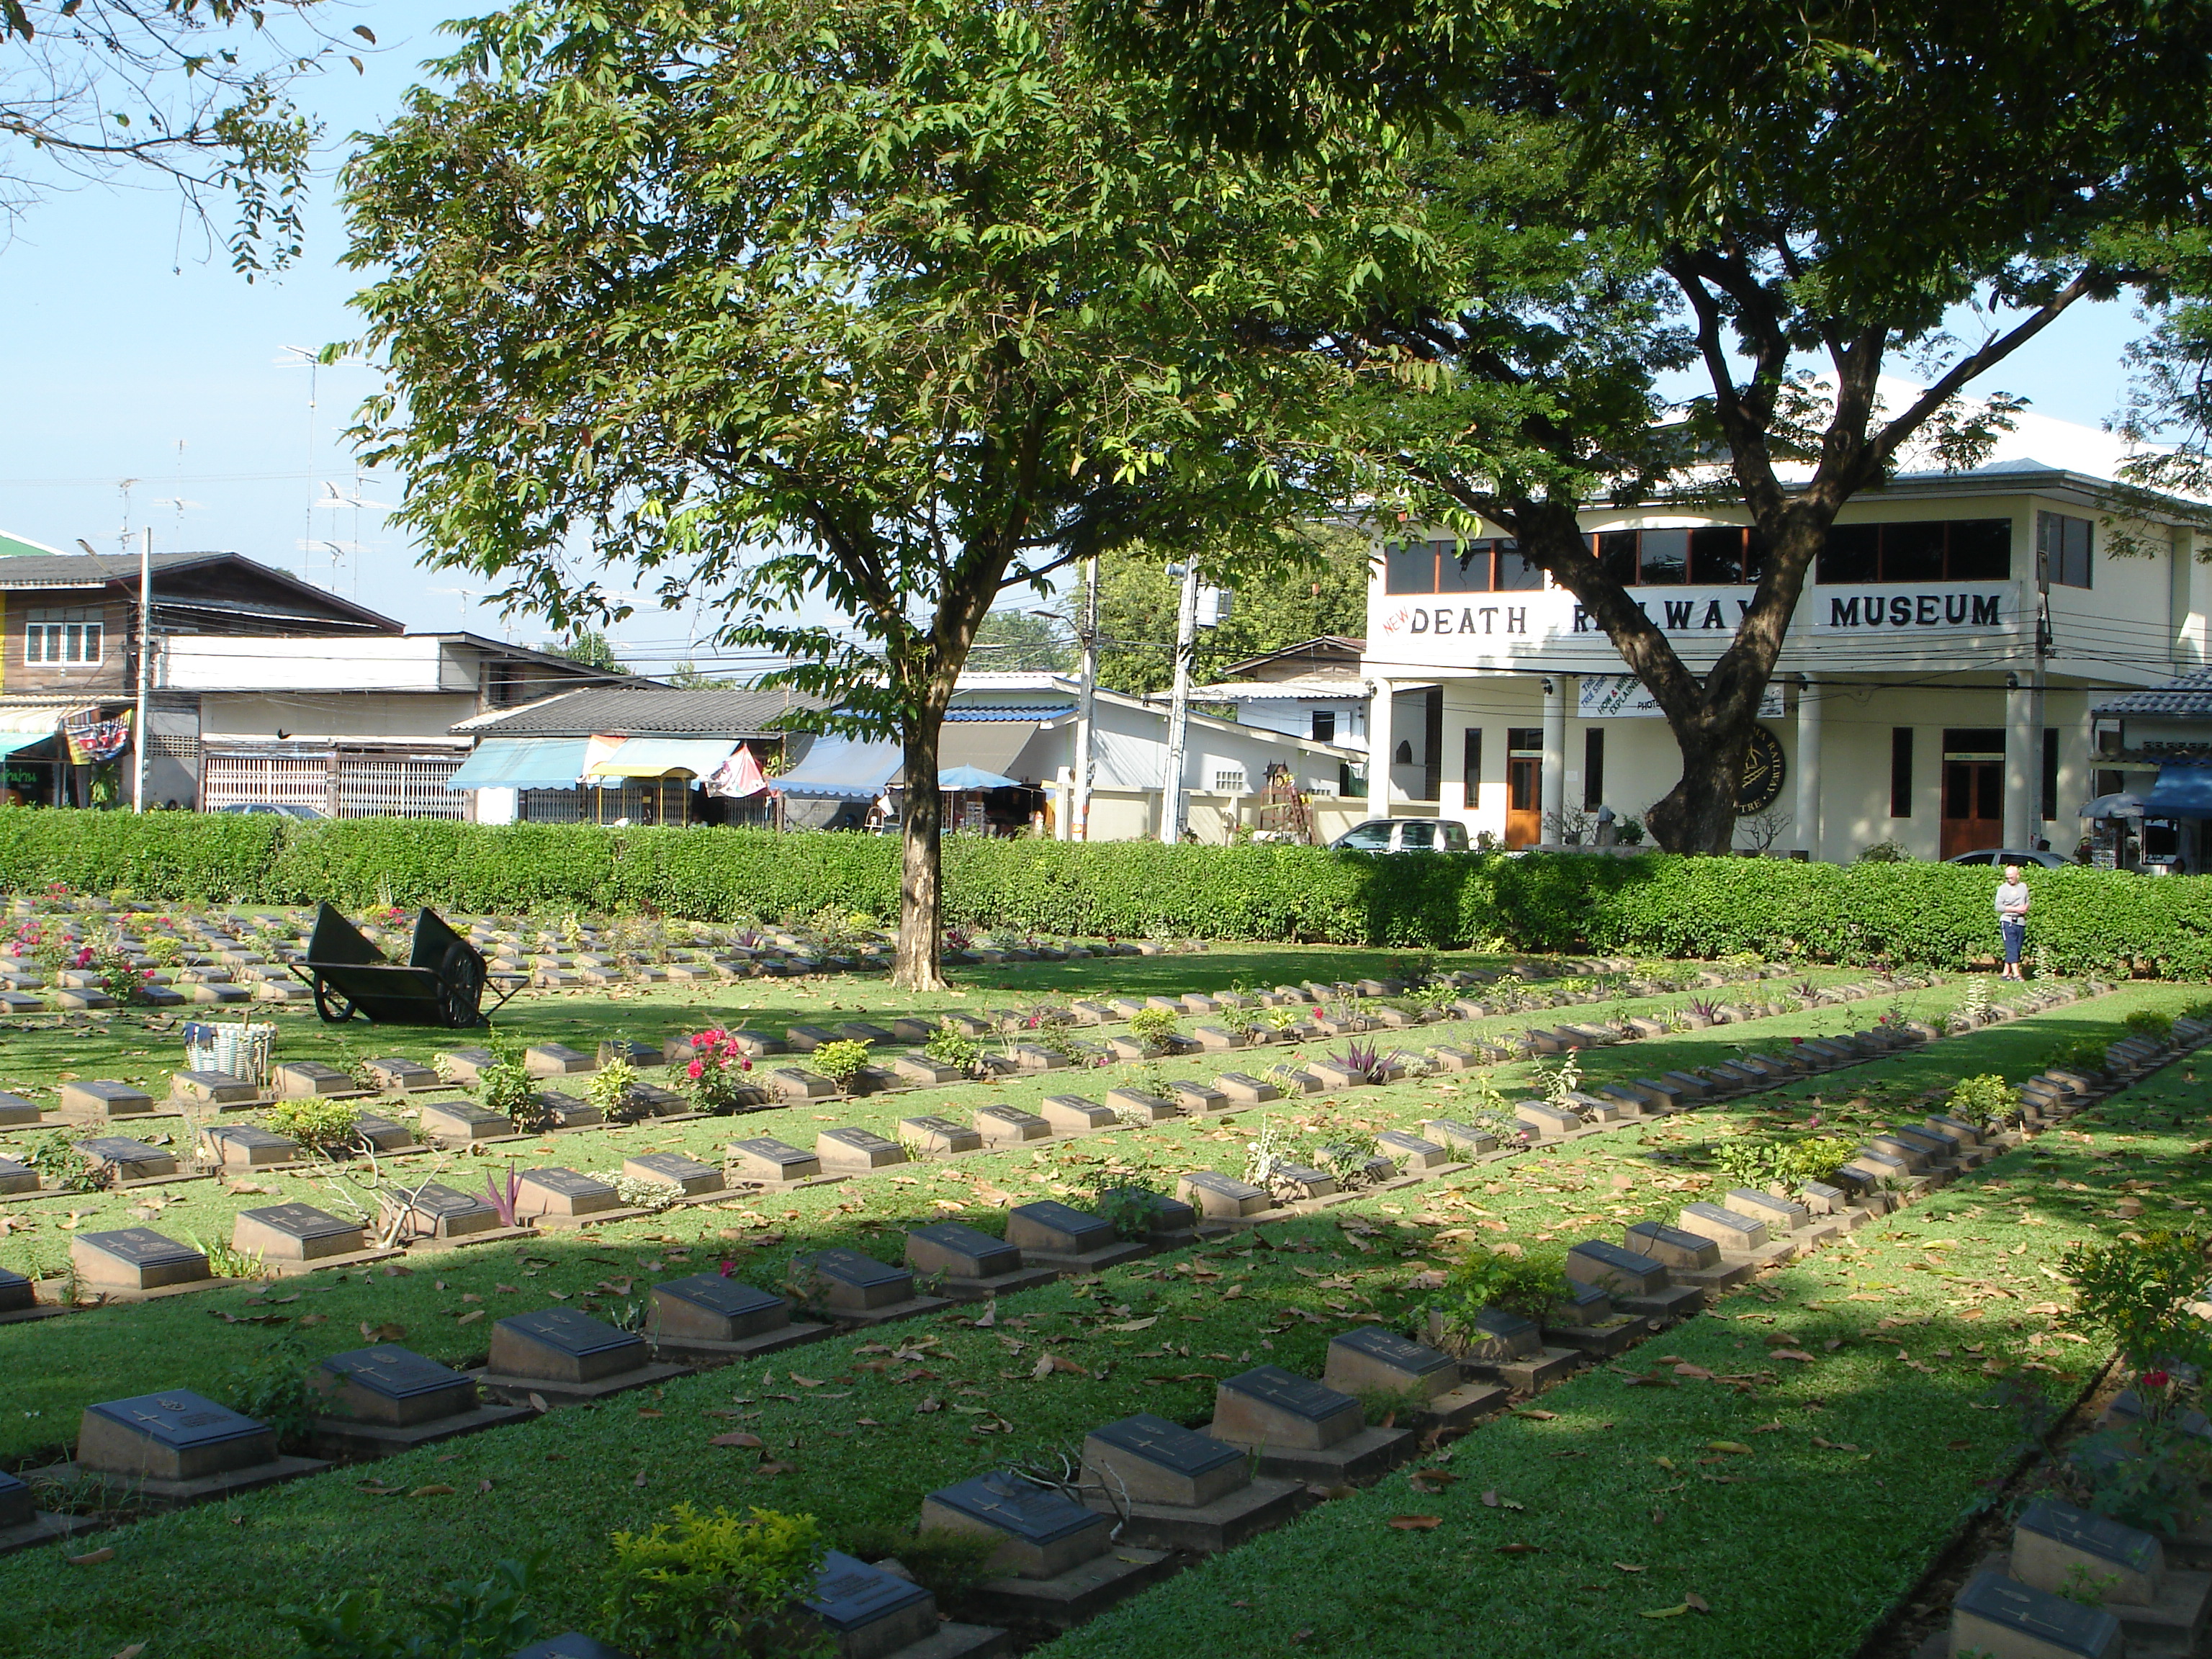 Kanchanaburi War Cemetery for Allied Soldiers and Death Railway Museum in Kanchanaburi, Thailand. Photo taken by Mark Joseph Jochim on January 9, 2008.